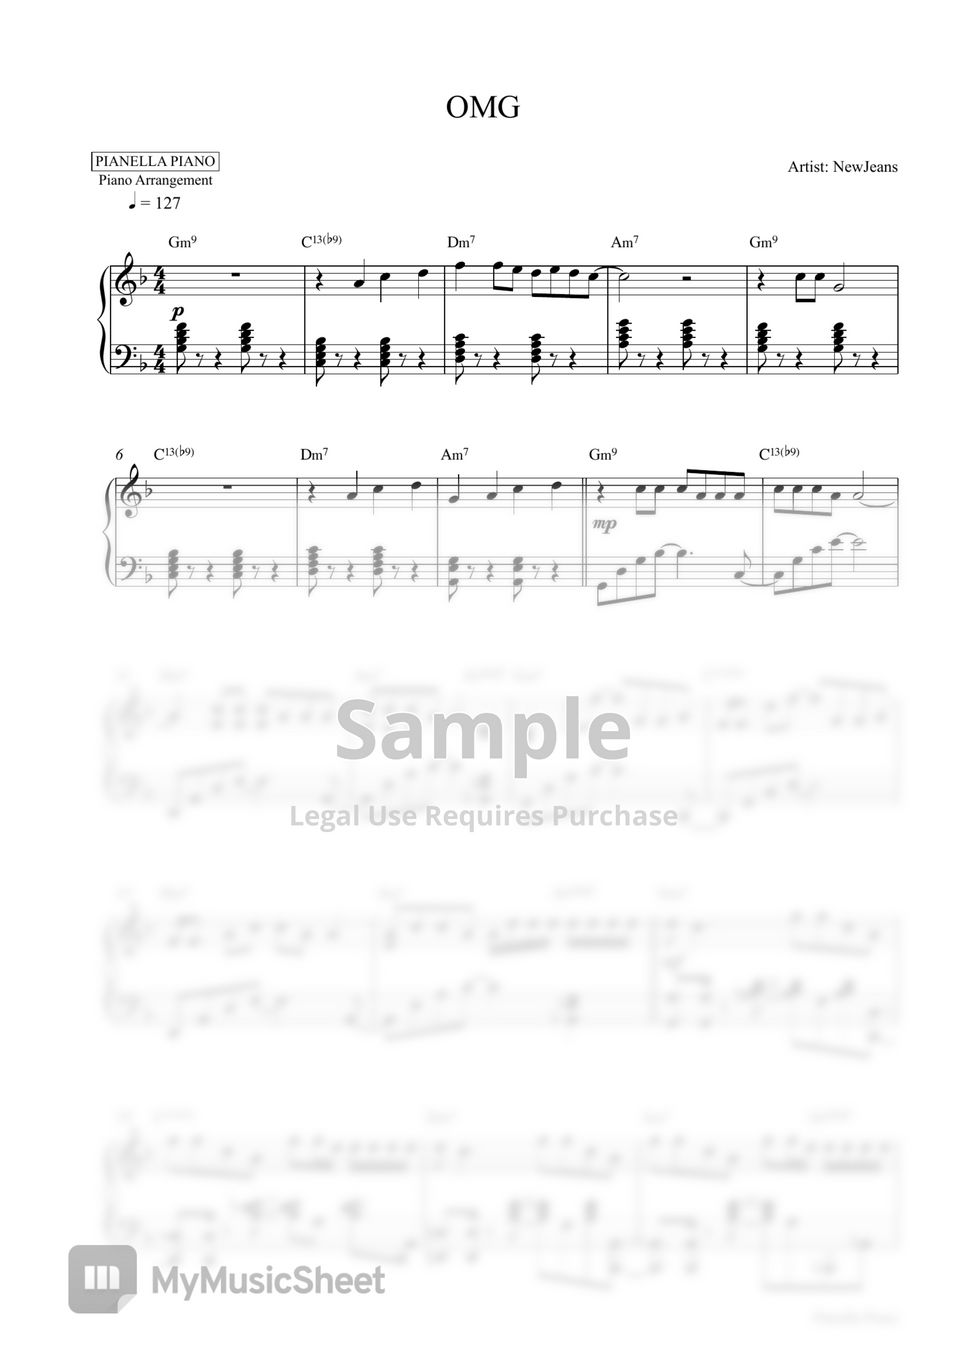 NewJeans - OMG (Piano Sheet) by Pianella Piano